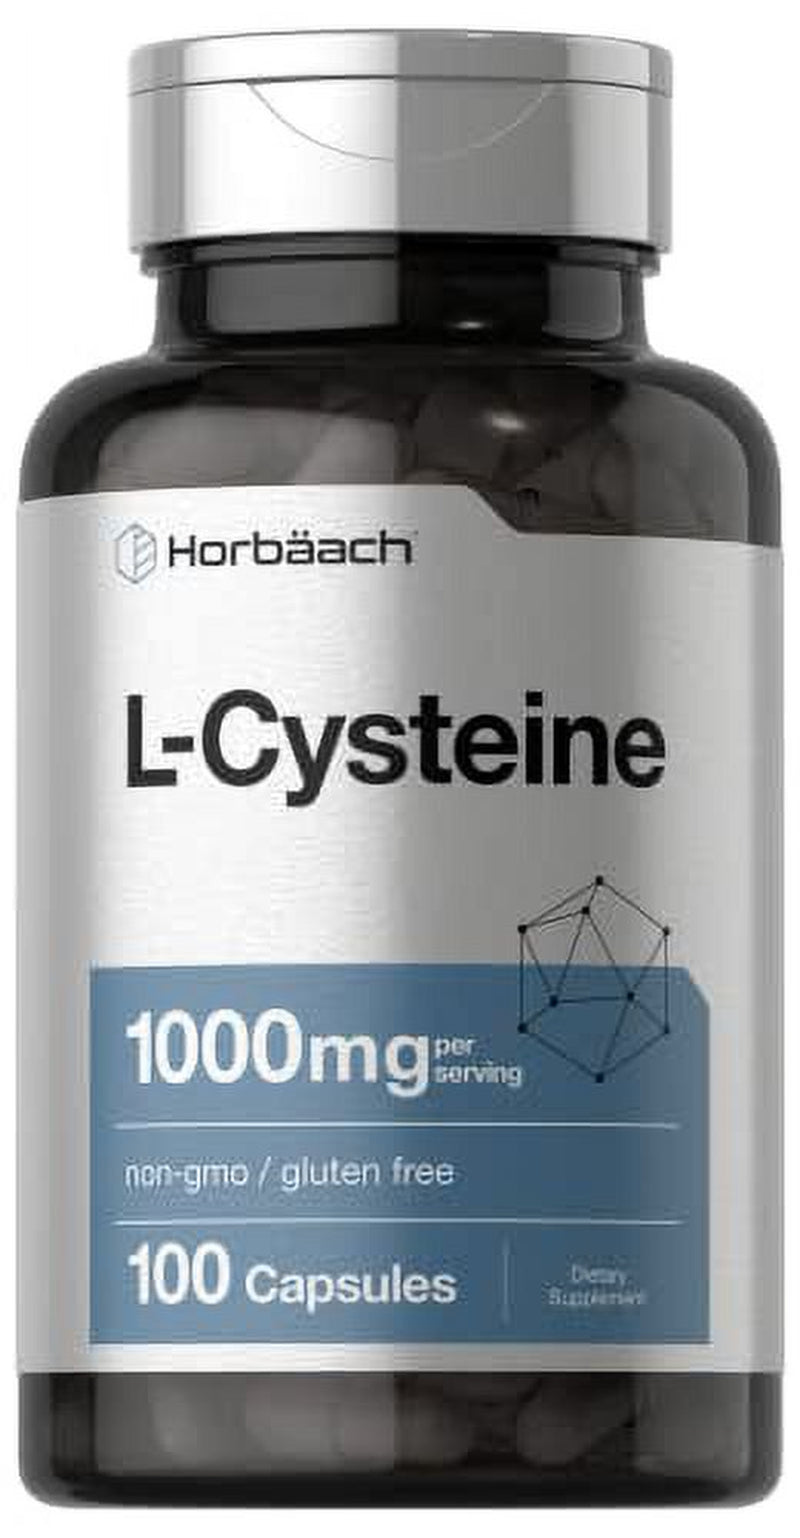 L Cysteine 1000Mg | 100 Powder Capsules | Non-Gmo, Gluten Free Supplement | by Horbaach